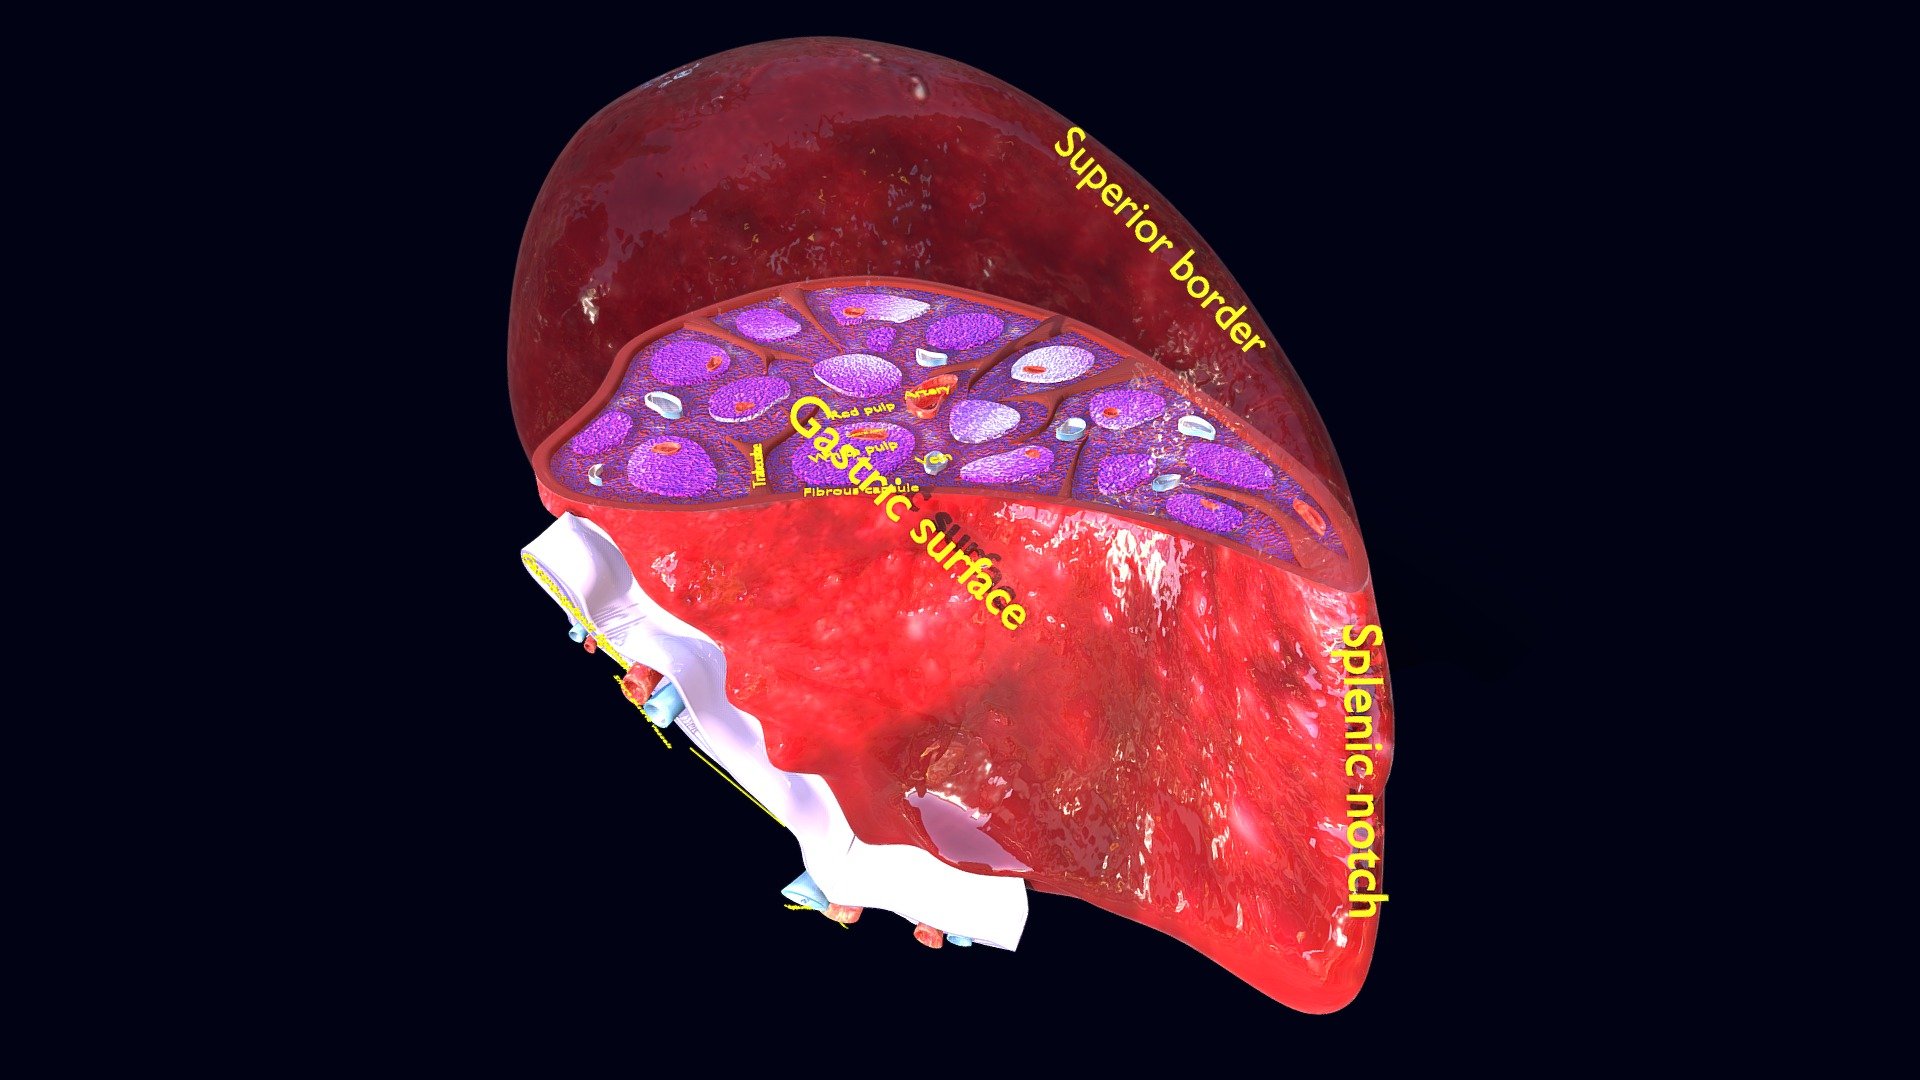 Spleen anatomy histology labelled detail